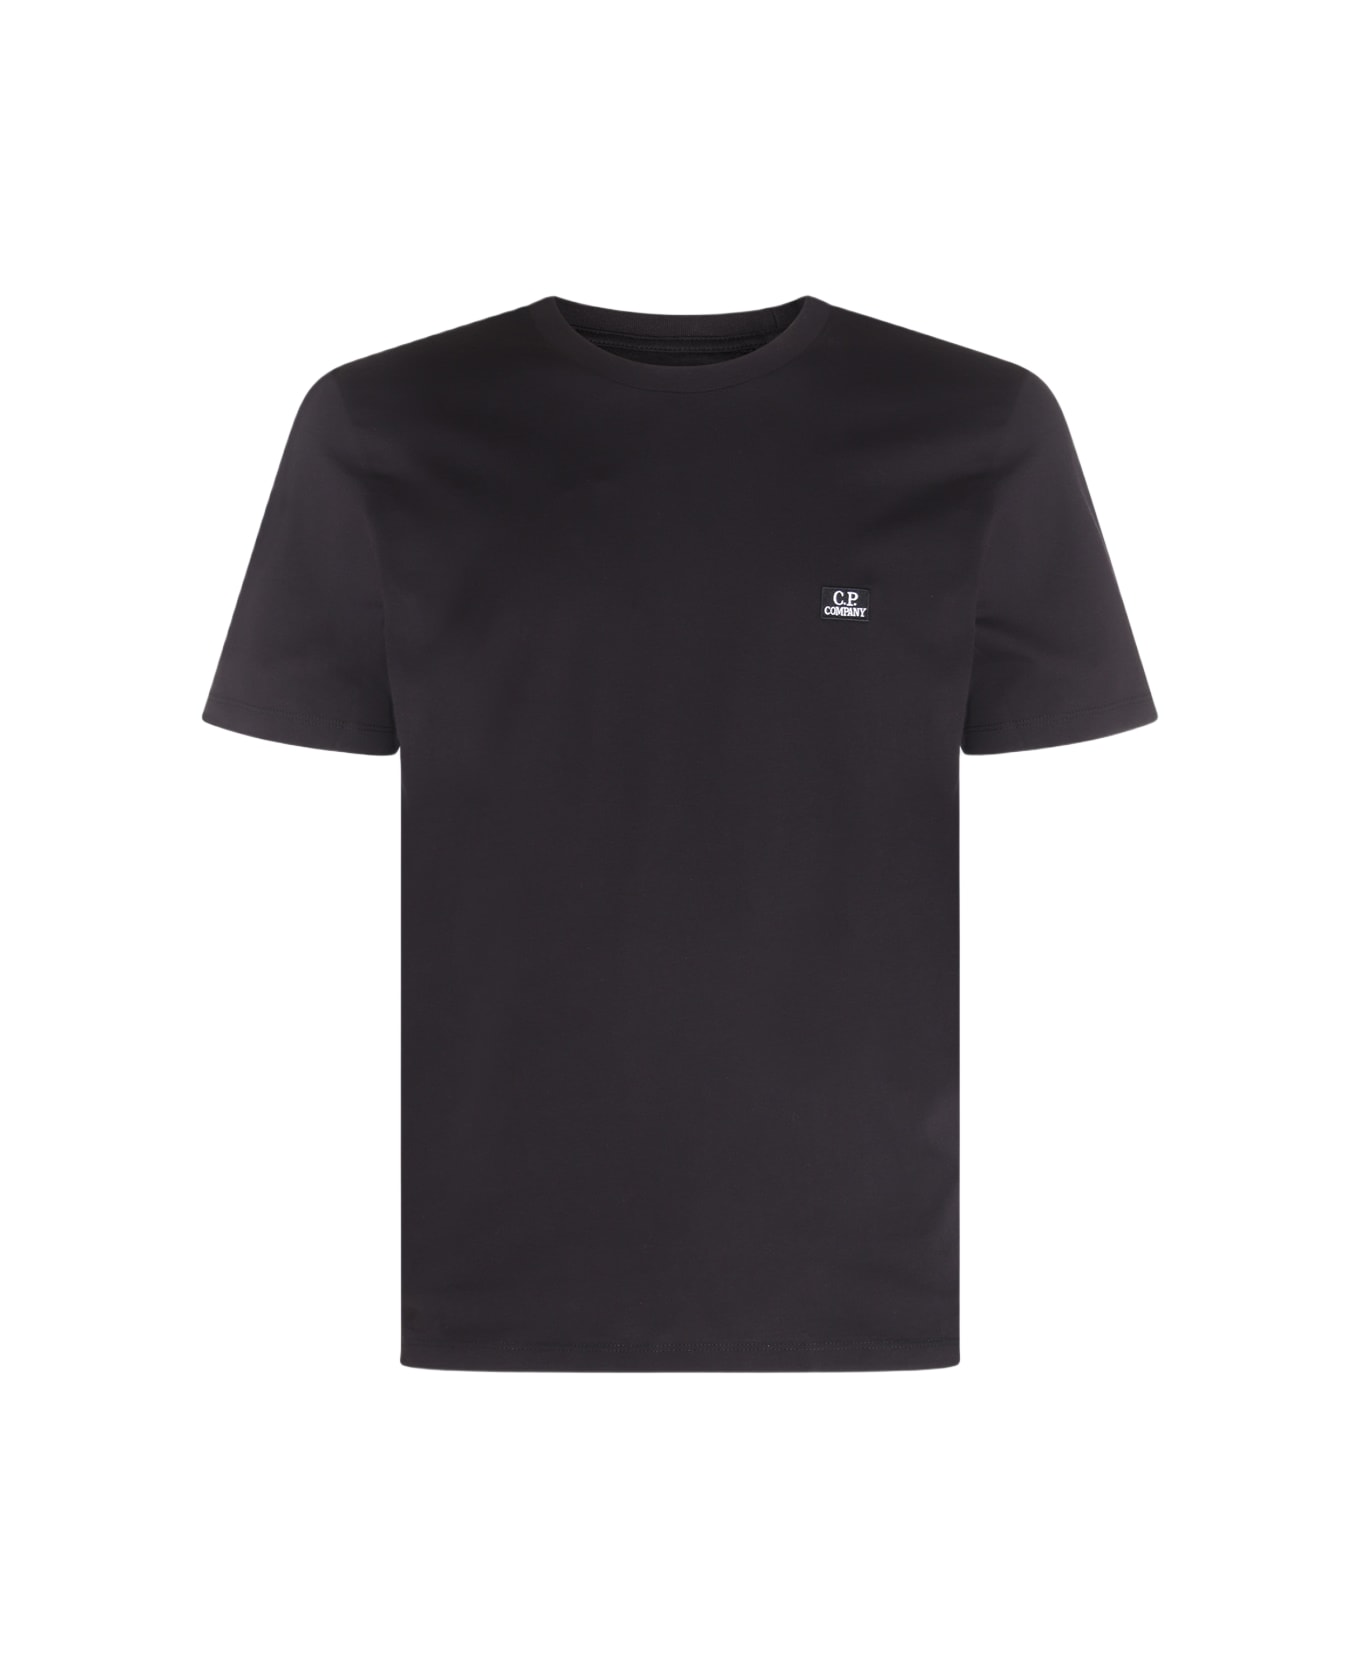 C.P. Company Black Cotton T-shirt - Black